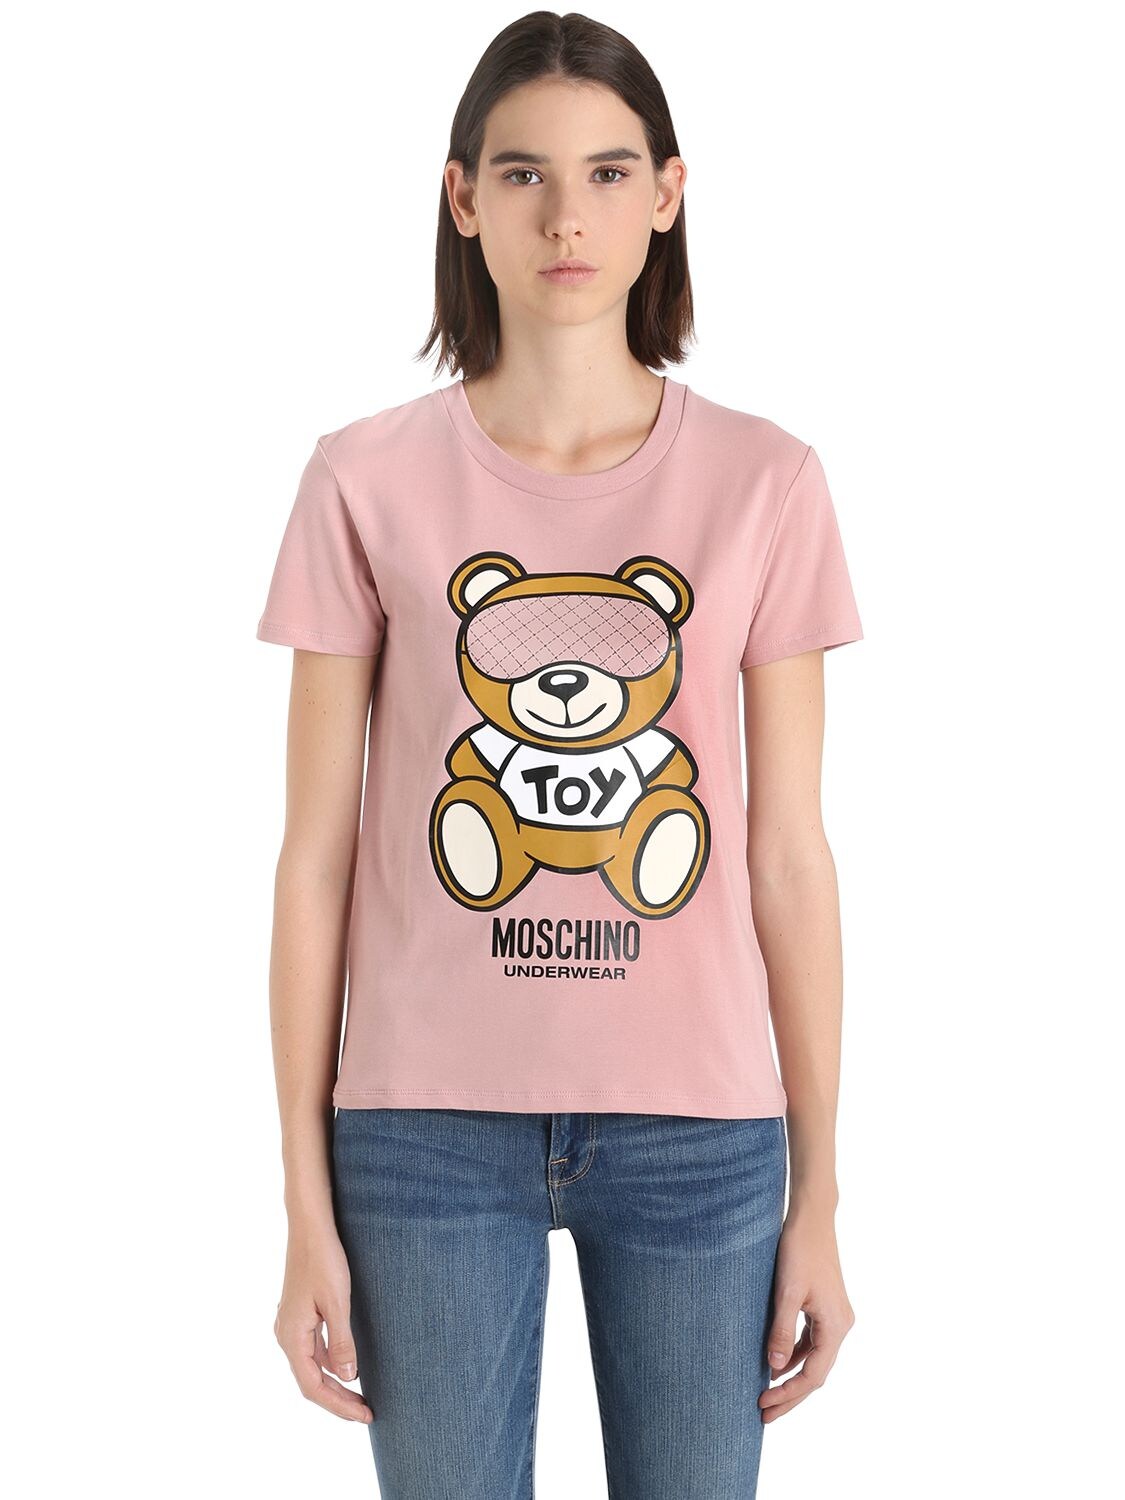 Moschino Underwear Underbear Printed Cotton Jersey T-shirt In Pink